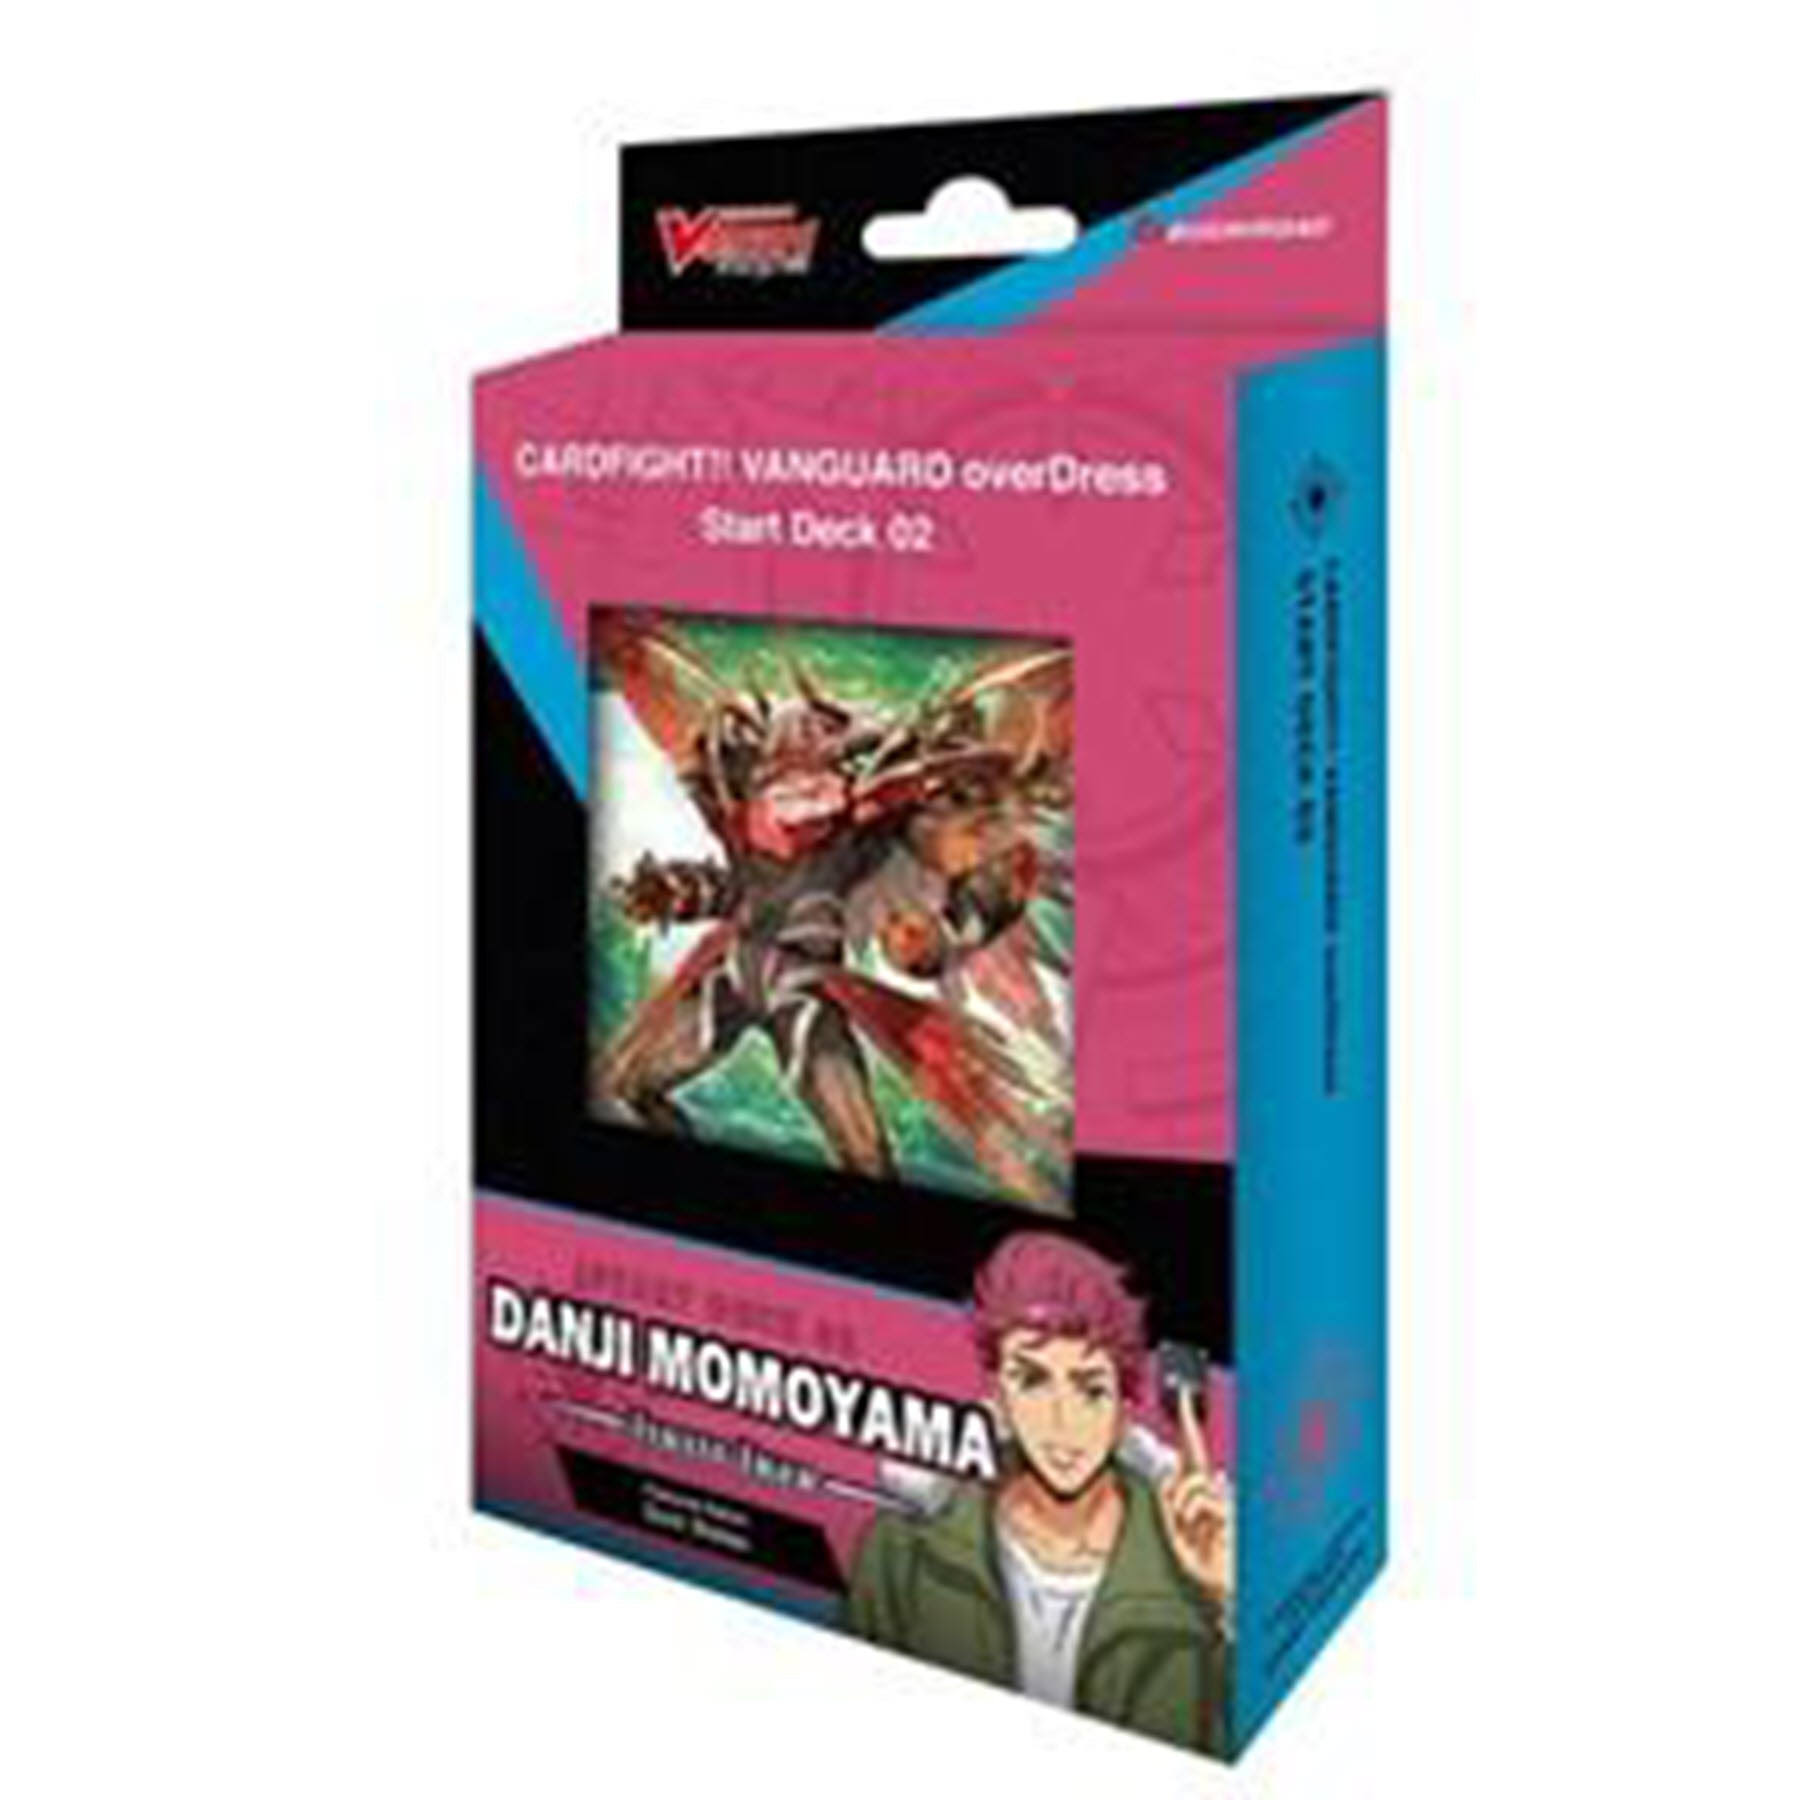 Cardfight Vanguard overDress Start Deck 02: Danji Momoyama, Tyrant Tiger